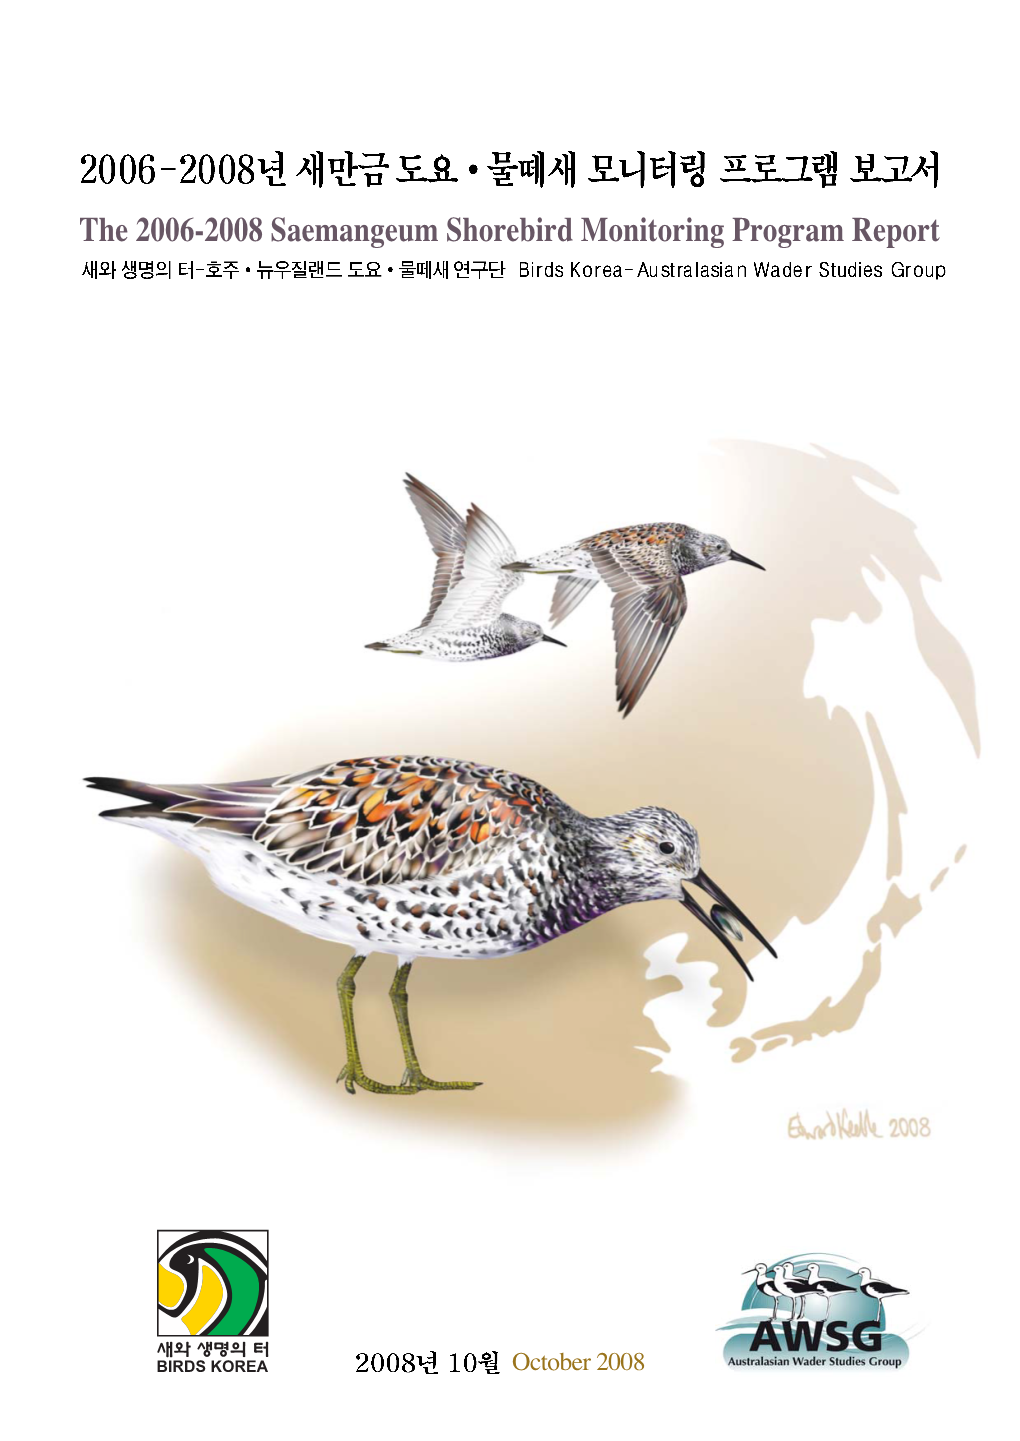 The 2006-2008 Saemangeum Shorebird Monitoring Program Report